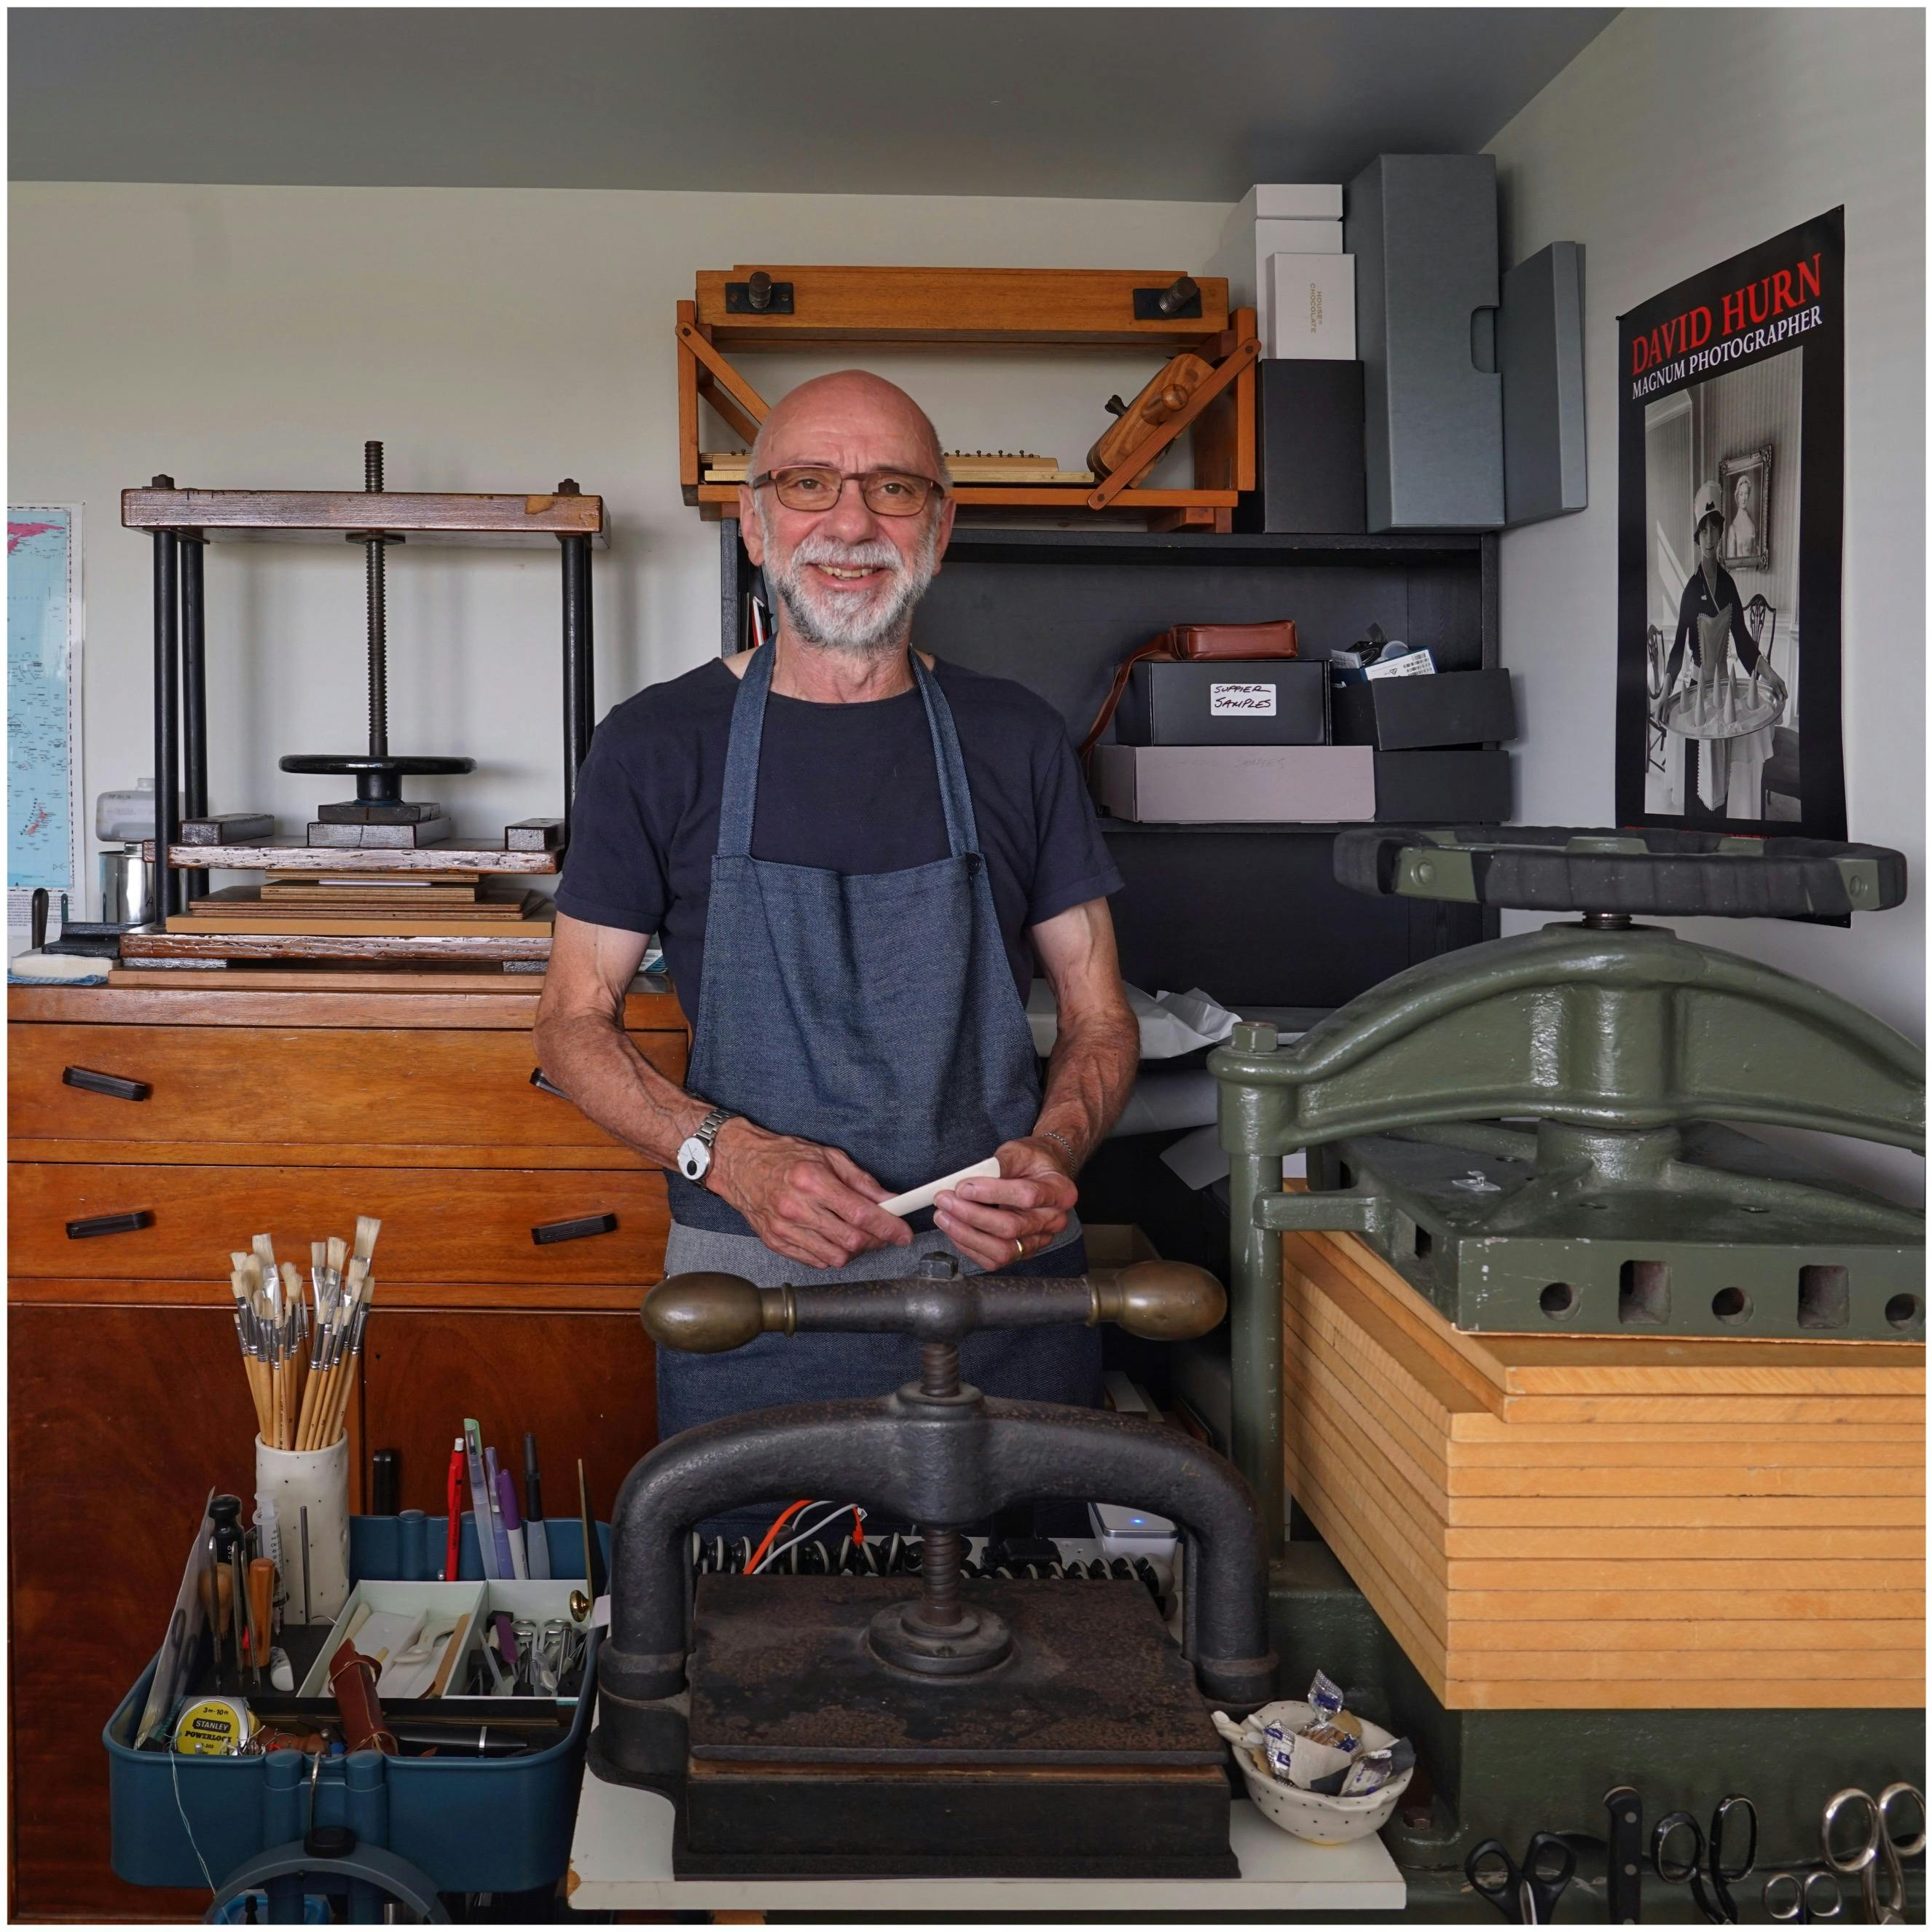 David Ashman in his studio